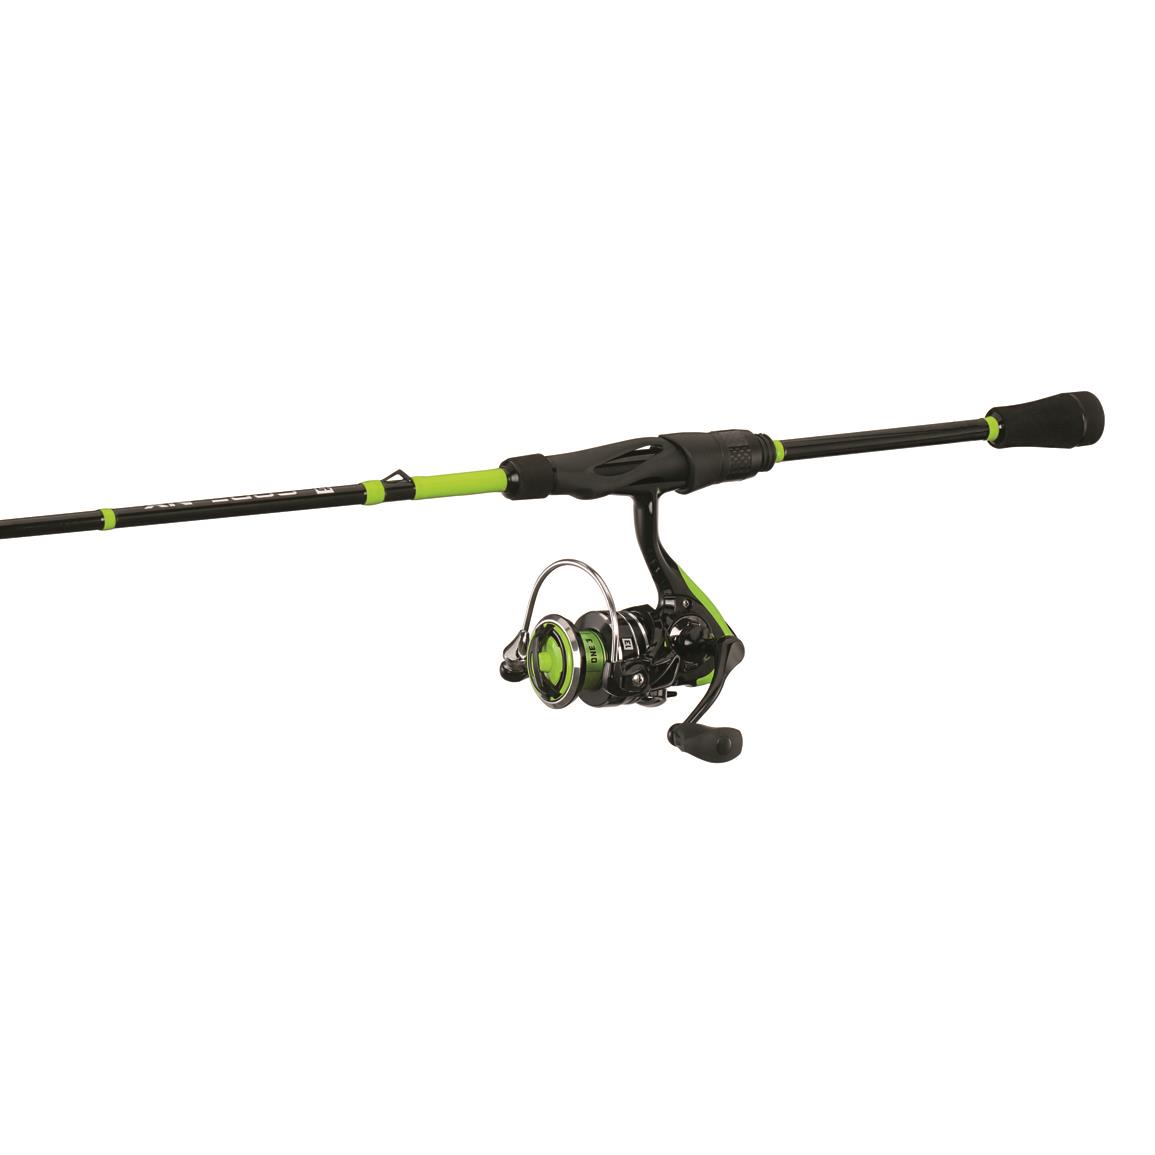 13 Fishing Code NX Spinning Combo, 6'10 Length, Medium Light Power, 2000 Reel Size, 2 Piece